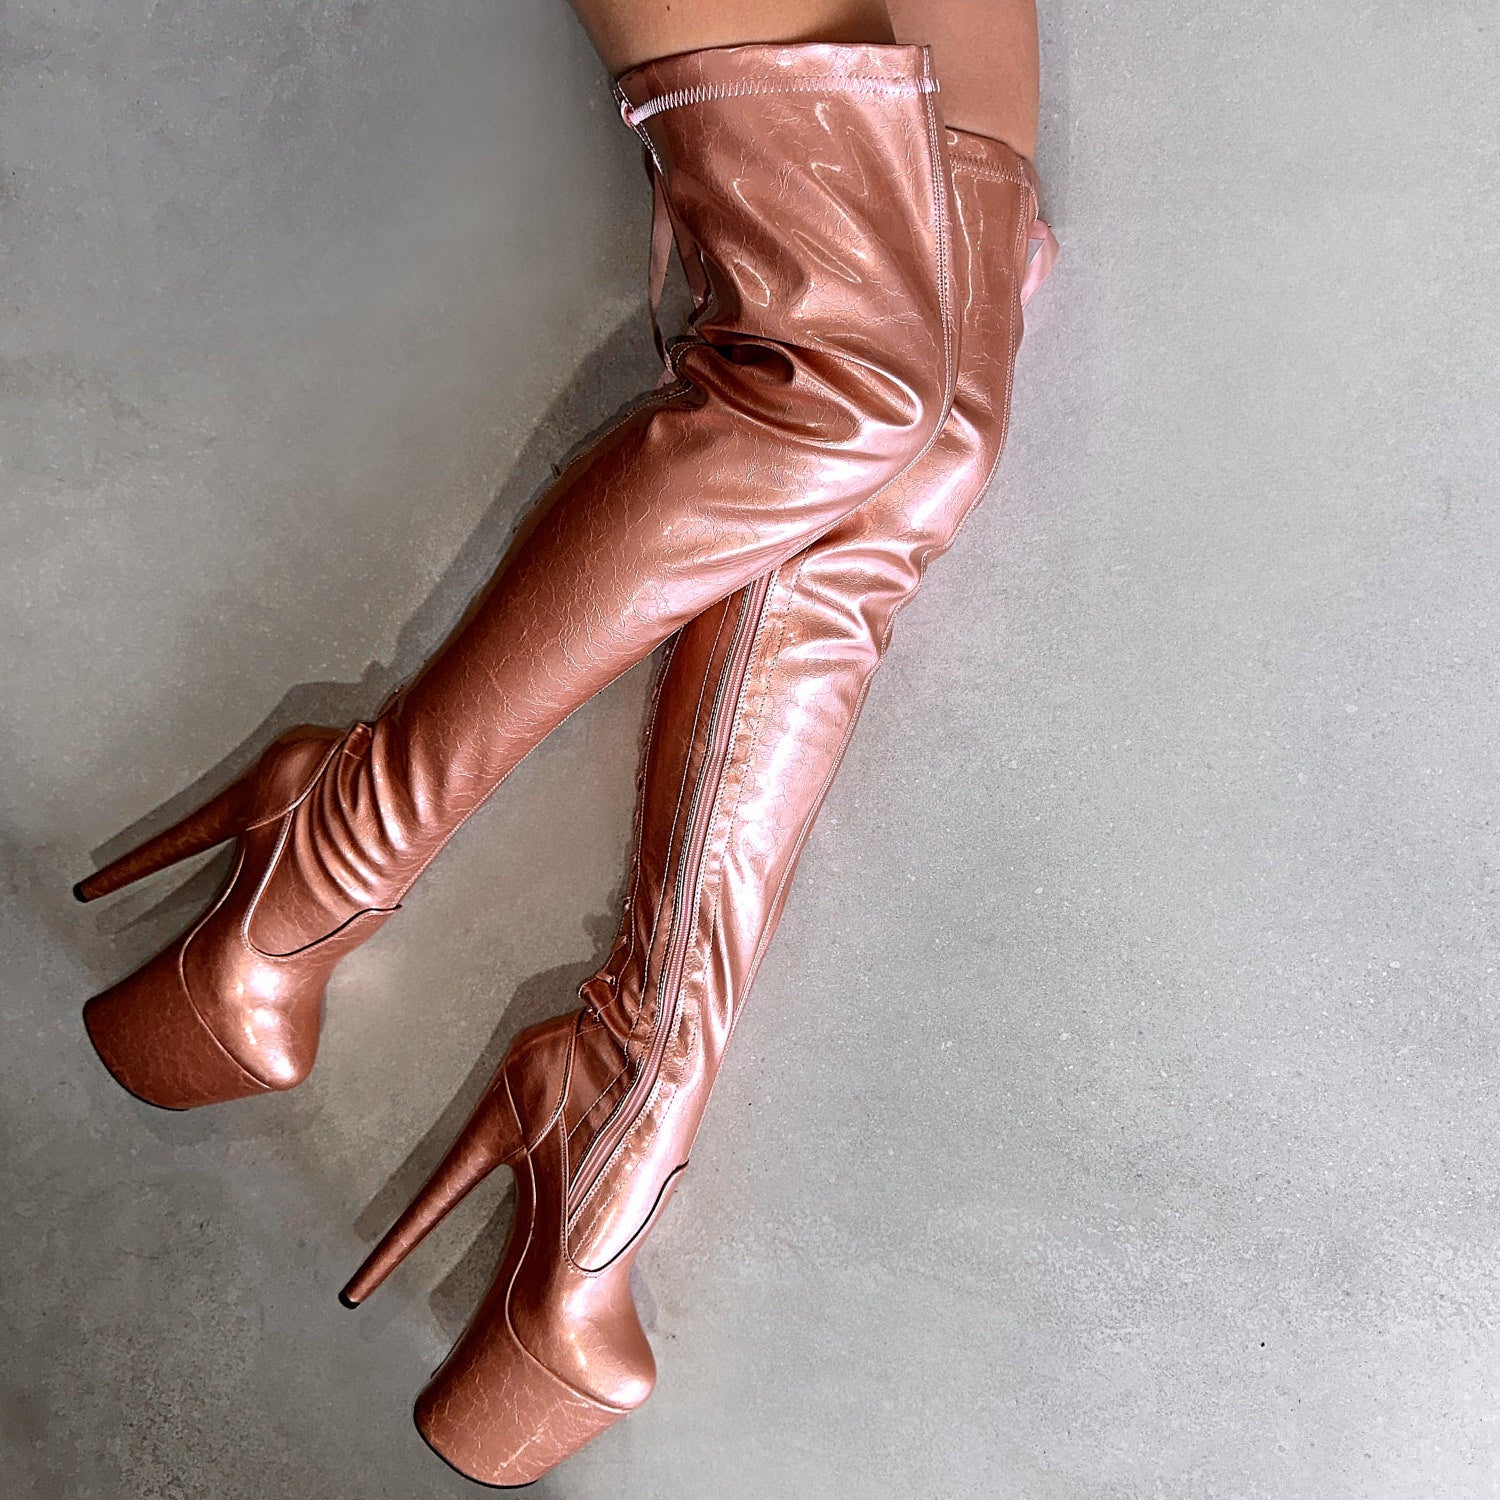 Heartbreaker - Rose Gold Thigh High - 8 INCH, stripper shoe, stripper heel, pole heel, not a pleaser, platform, dancer, pole dance, floor work